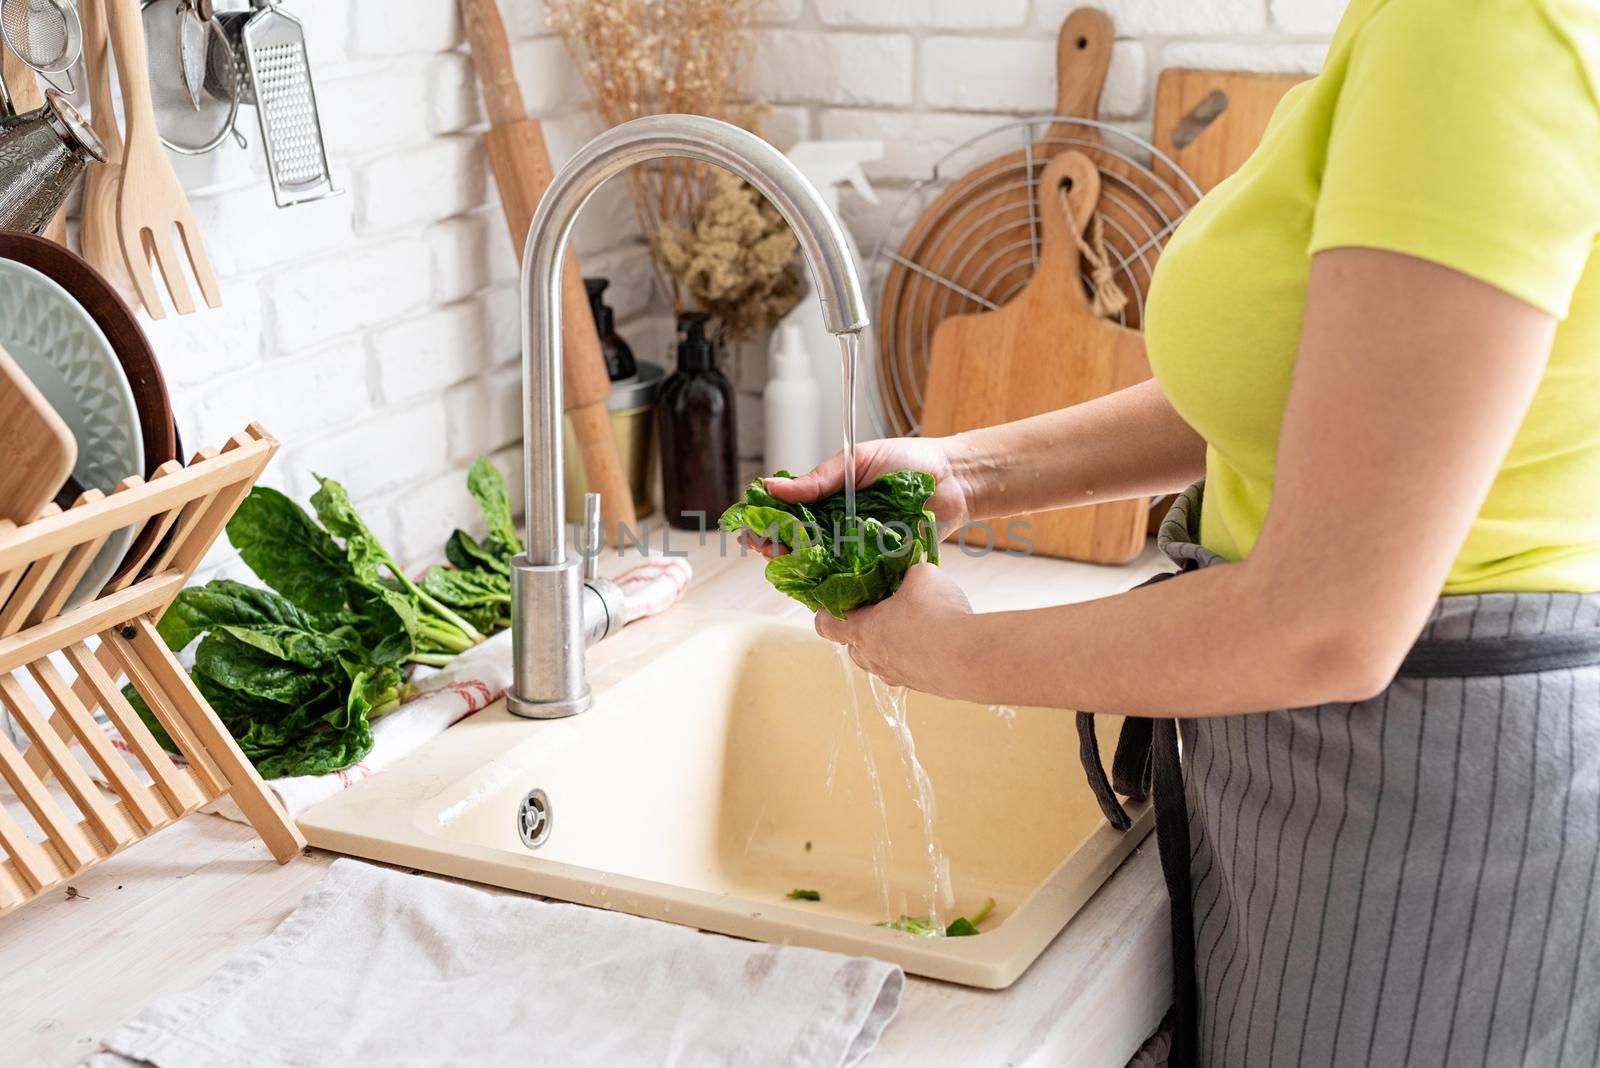 Woman Washing spinach in the Kitchen Sink by Desperada